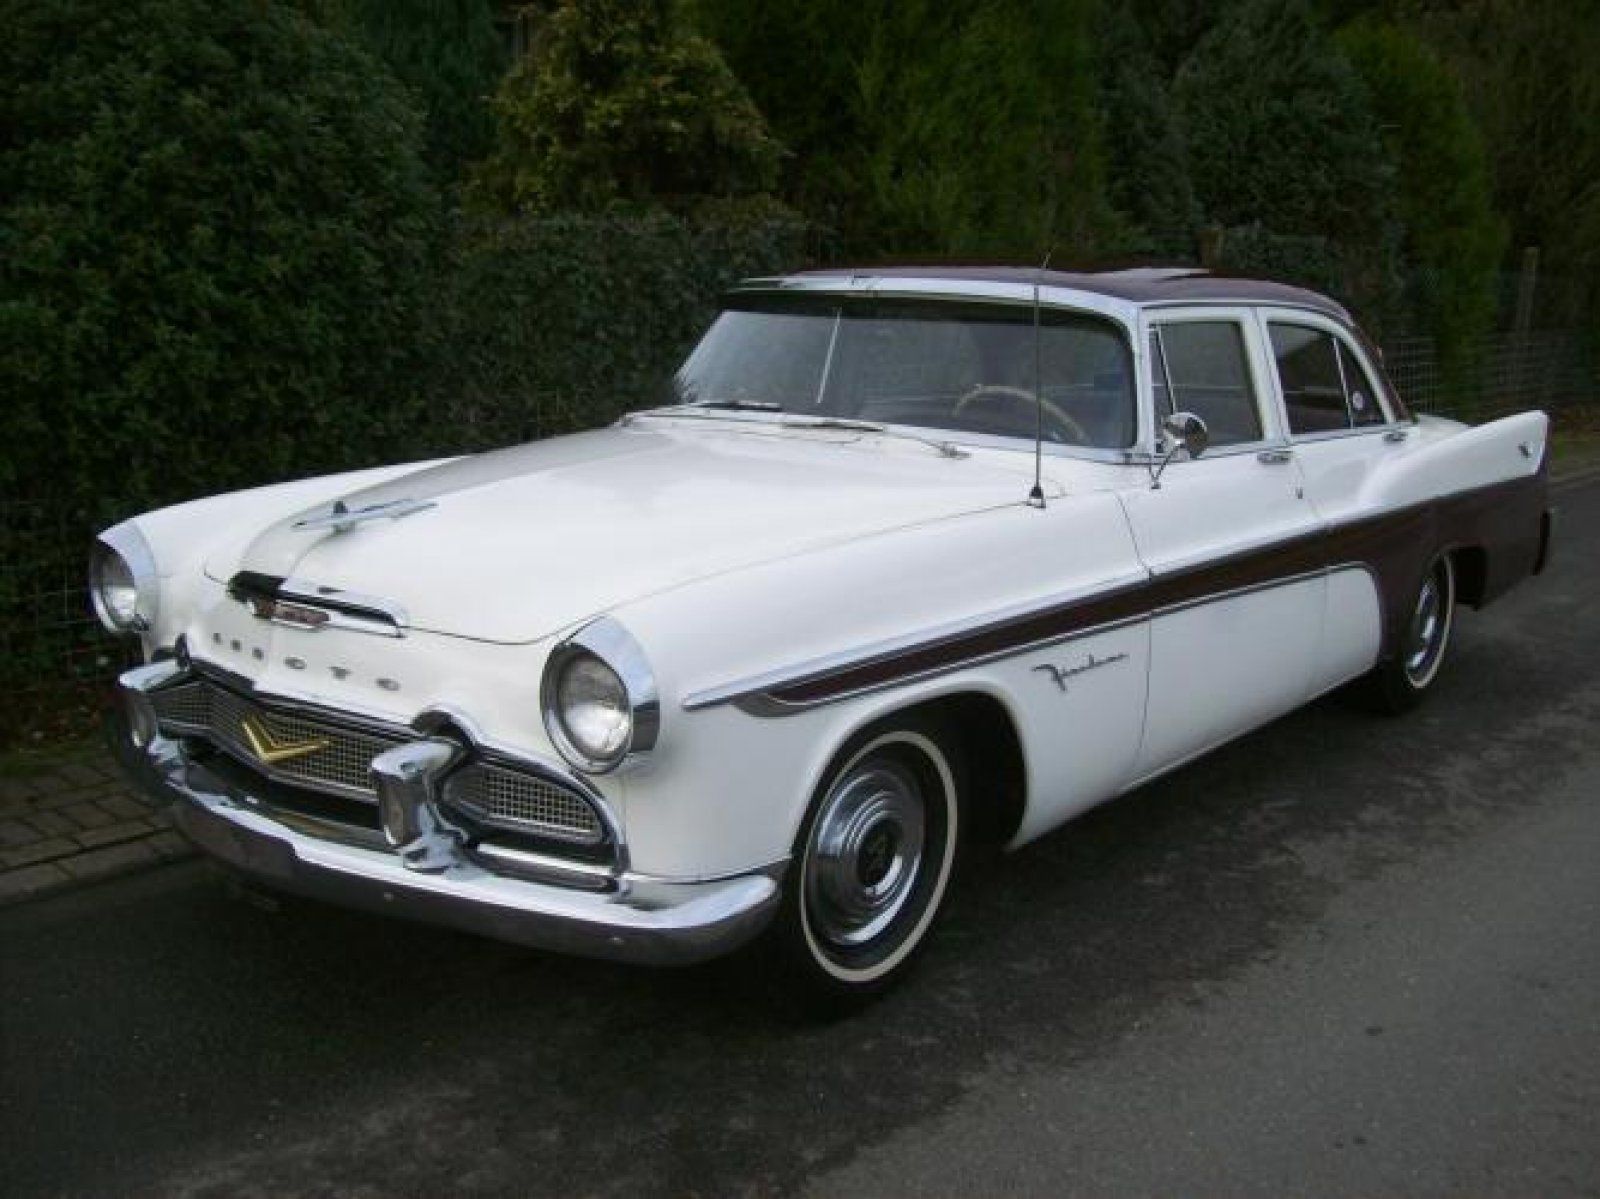 1956 DeSoto Sedan (American Horror Story)